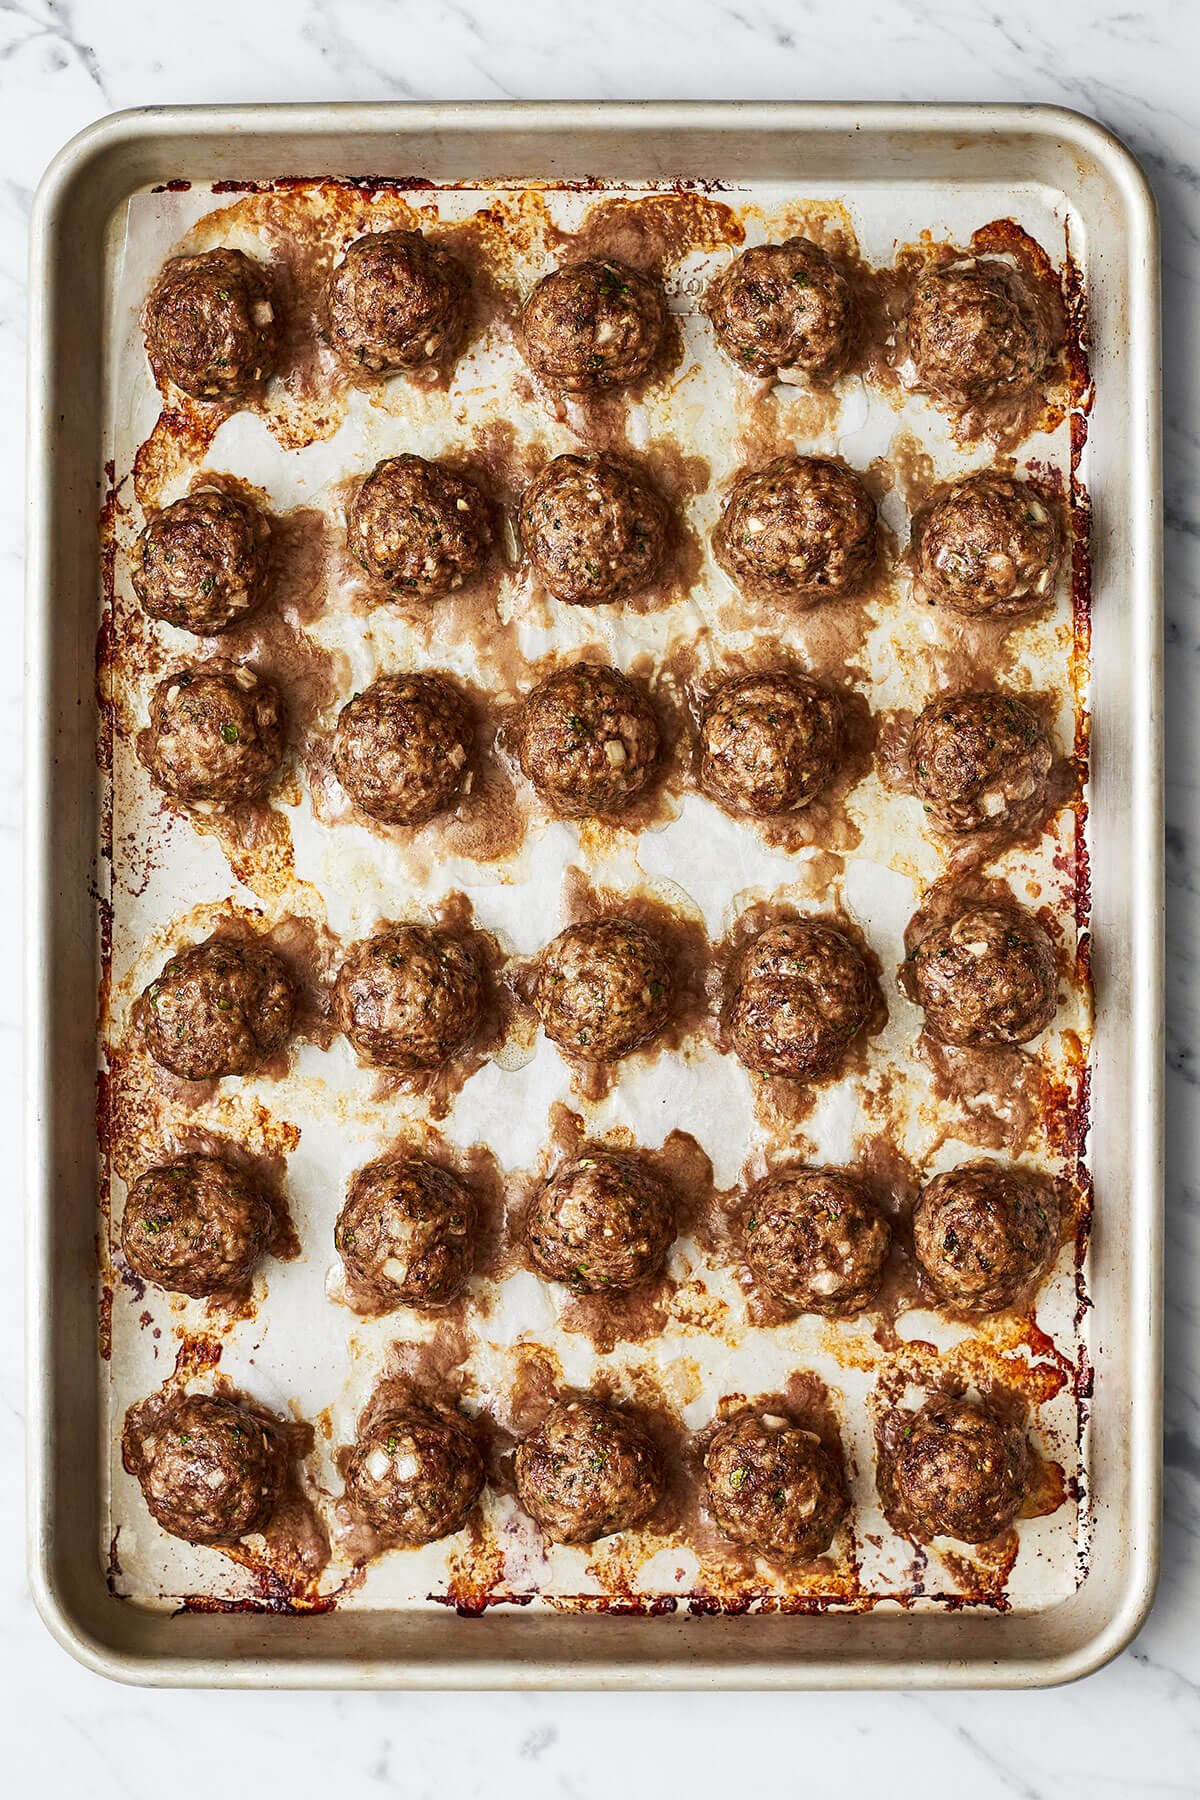 Baked meatballs on a sheet pan